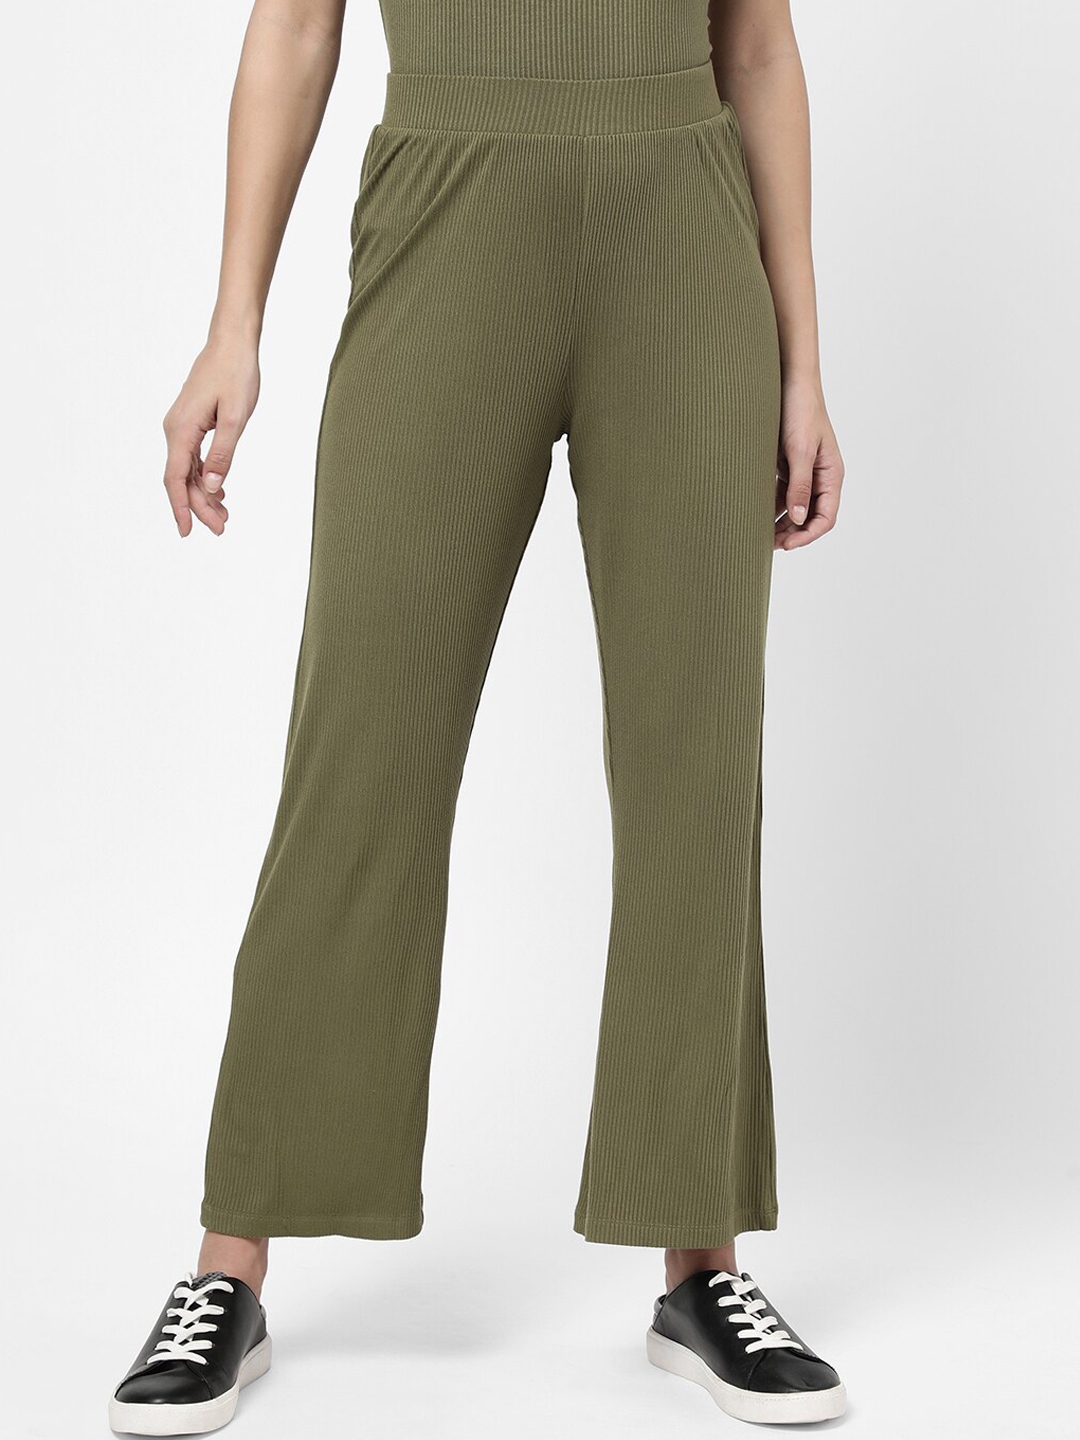 Buy R&B Women Olive Green Trousers - Trousers for Women 19069710 | Myntra